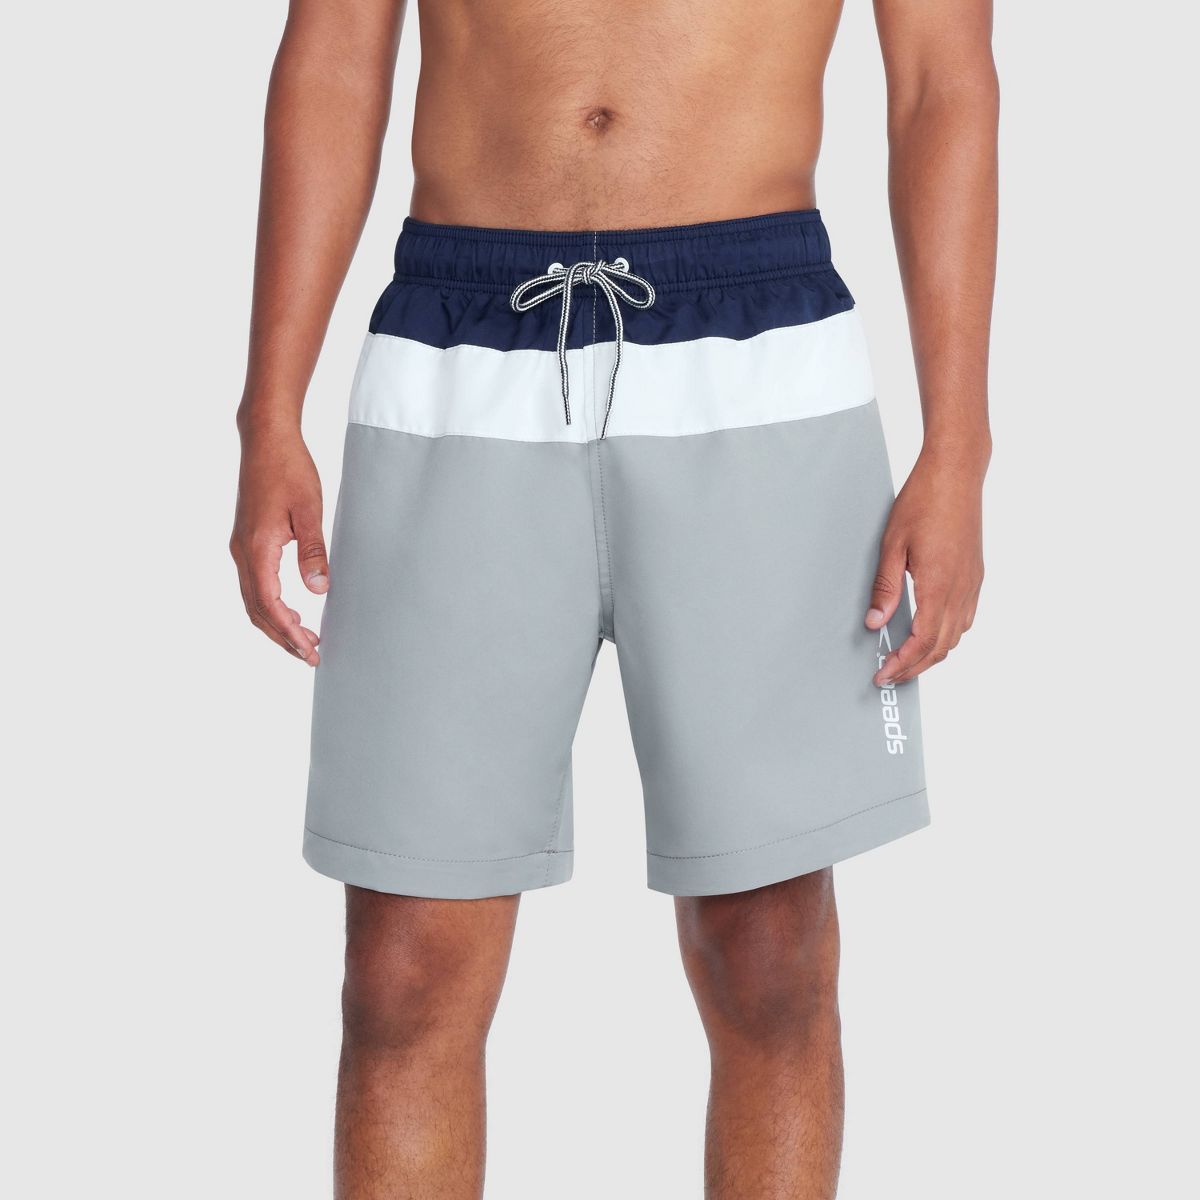 Speedo Men's 7" Tri-Colorblock Swim Shorts - Gray/White/Navy Blue | Target